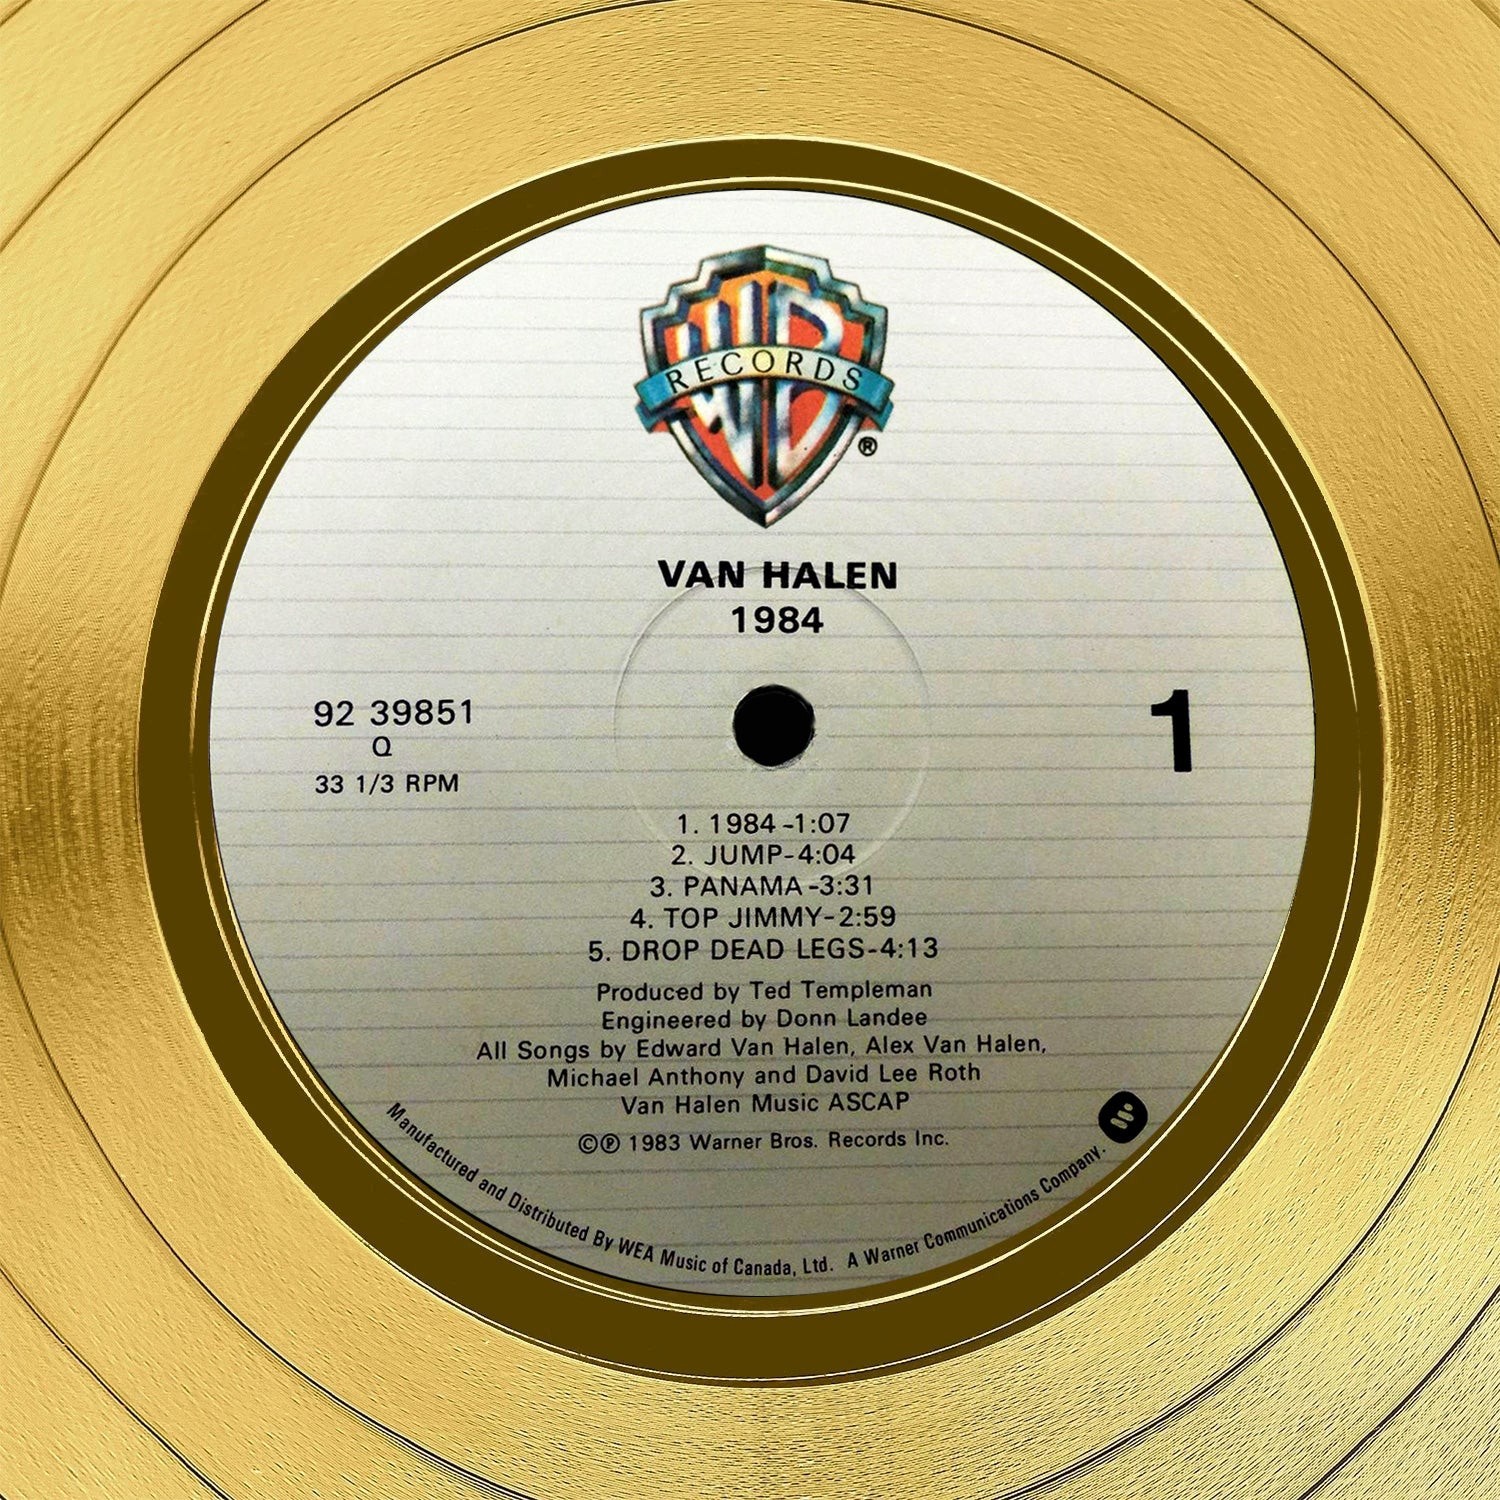 VAN HALEN! Original 1984 VINYL LP ALBUM! 1983,1984 Record